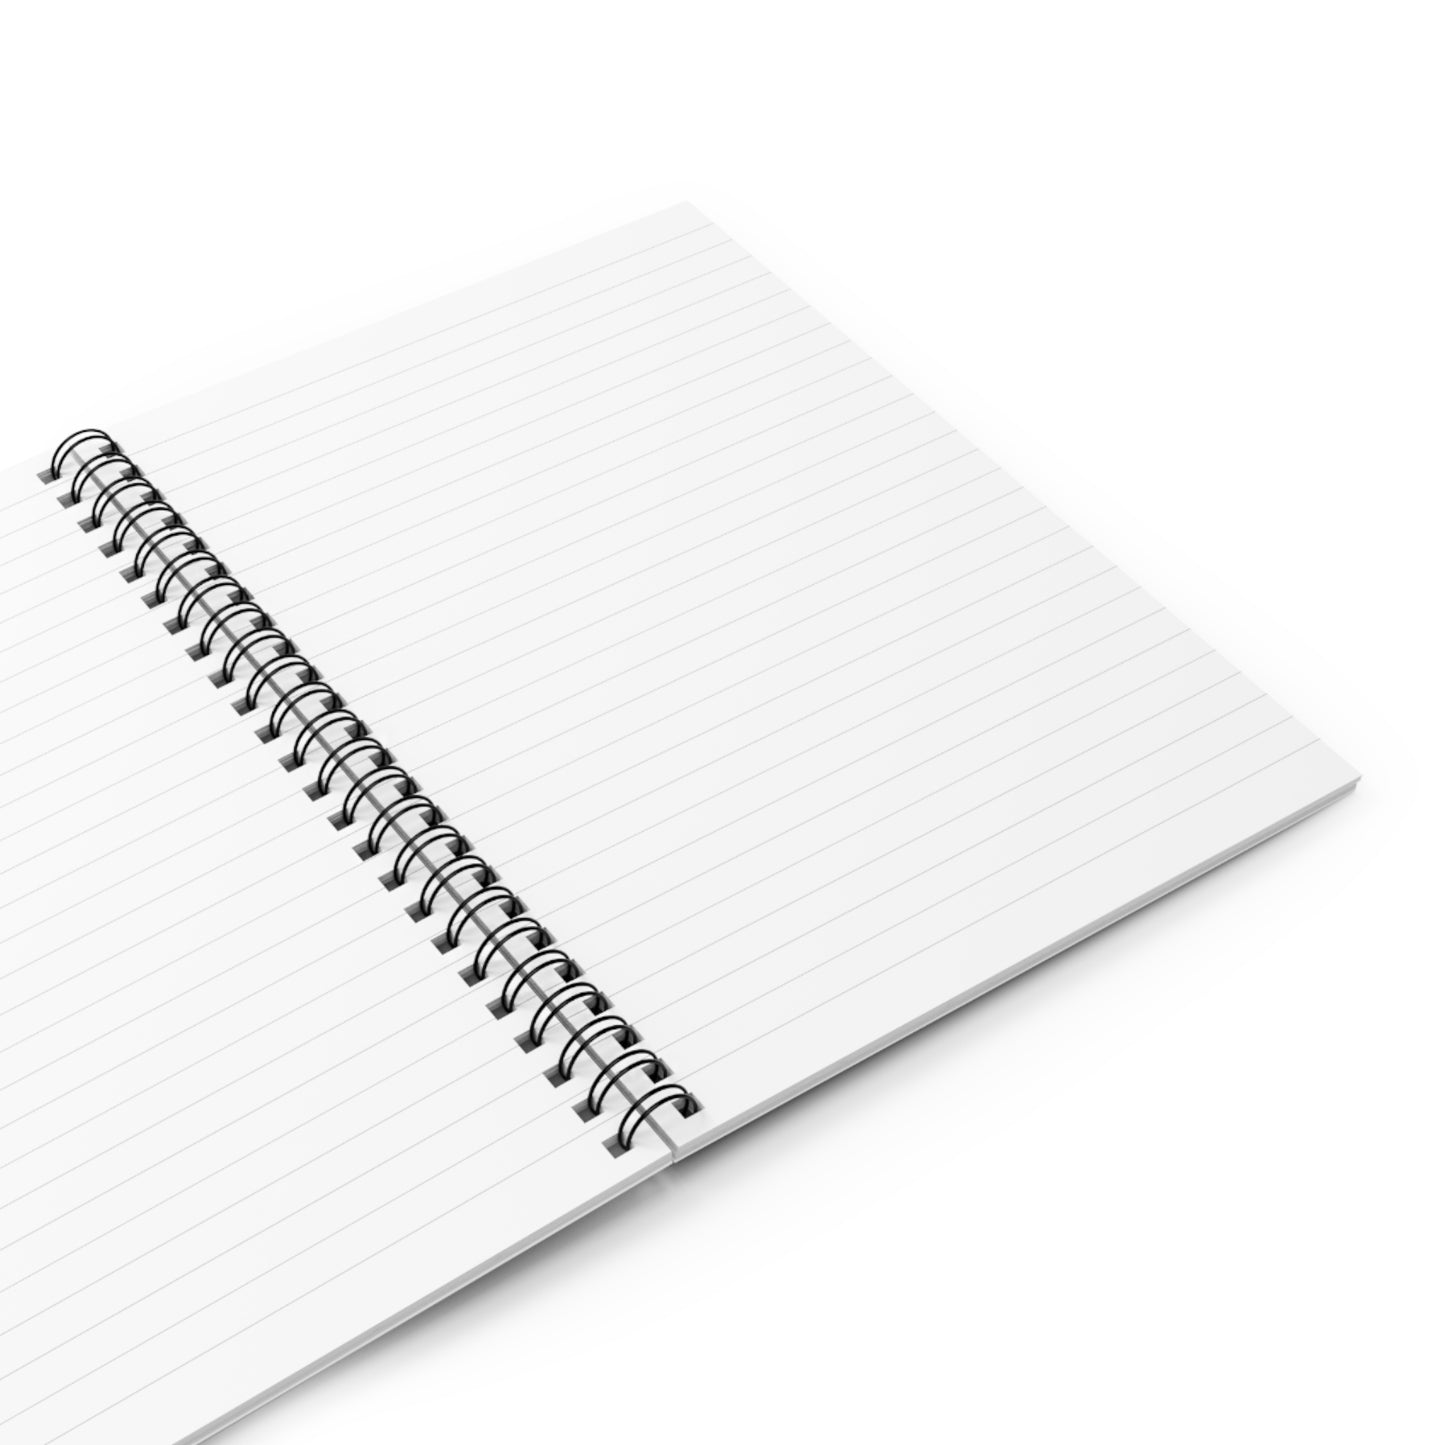 Sassy Black Yarns - Spiral Notebook (Ruled Line)